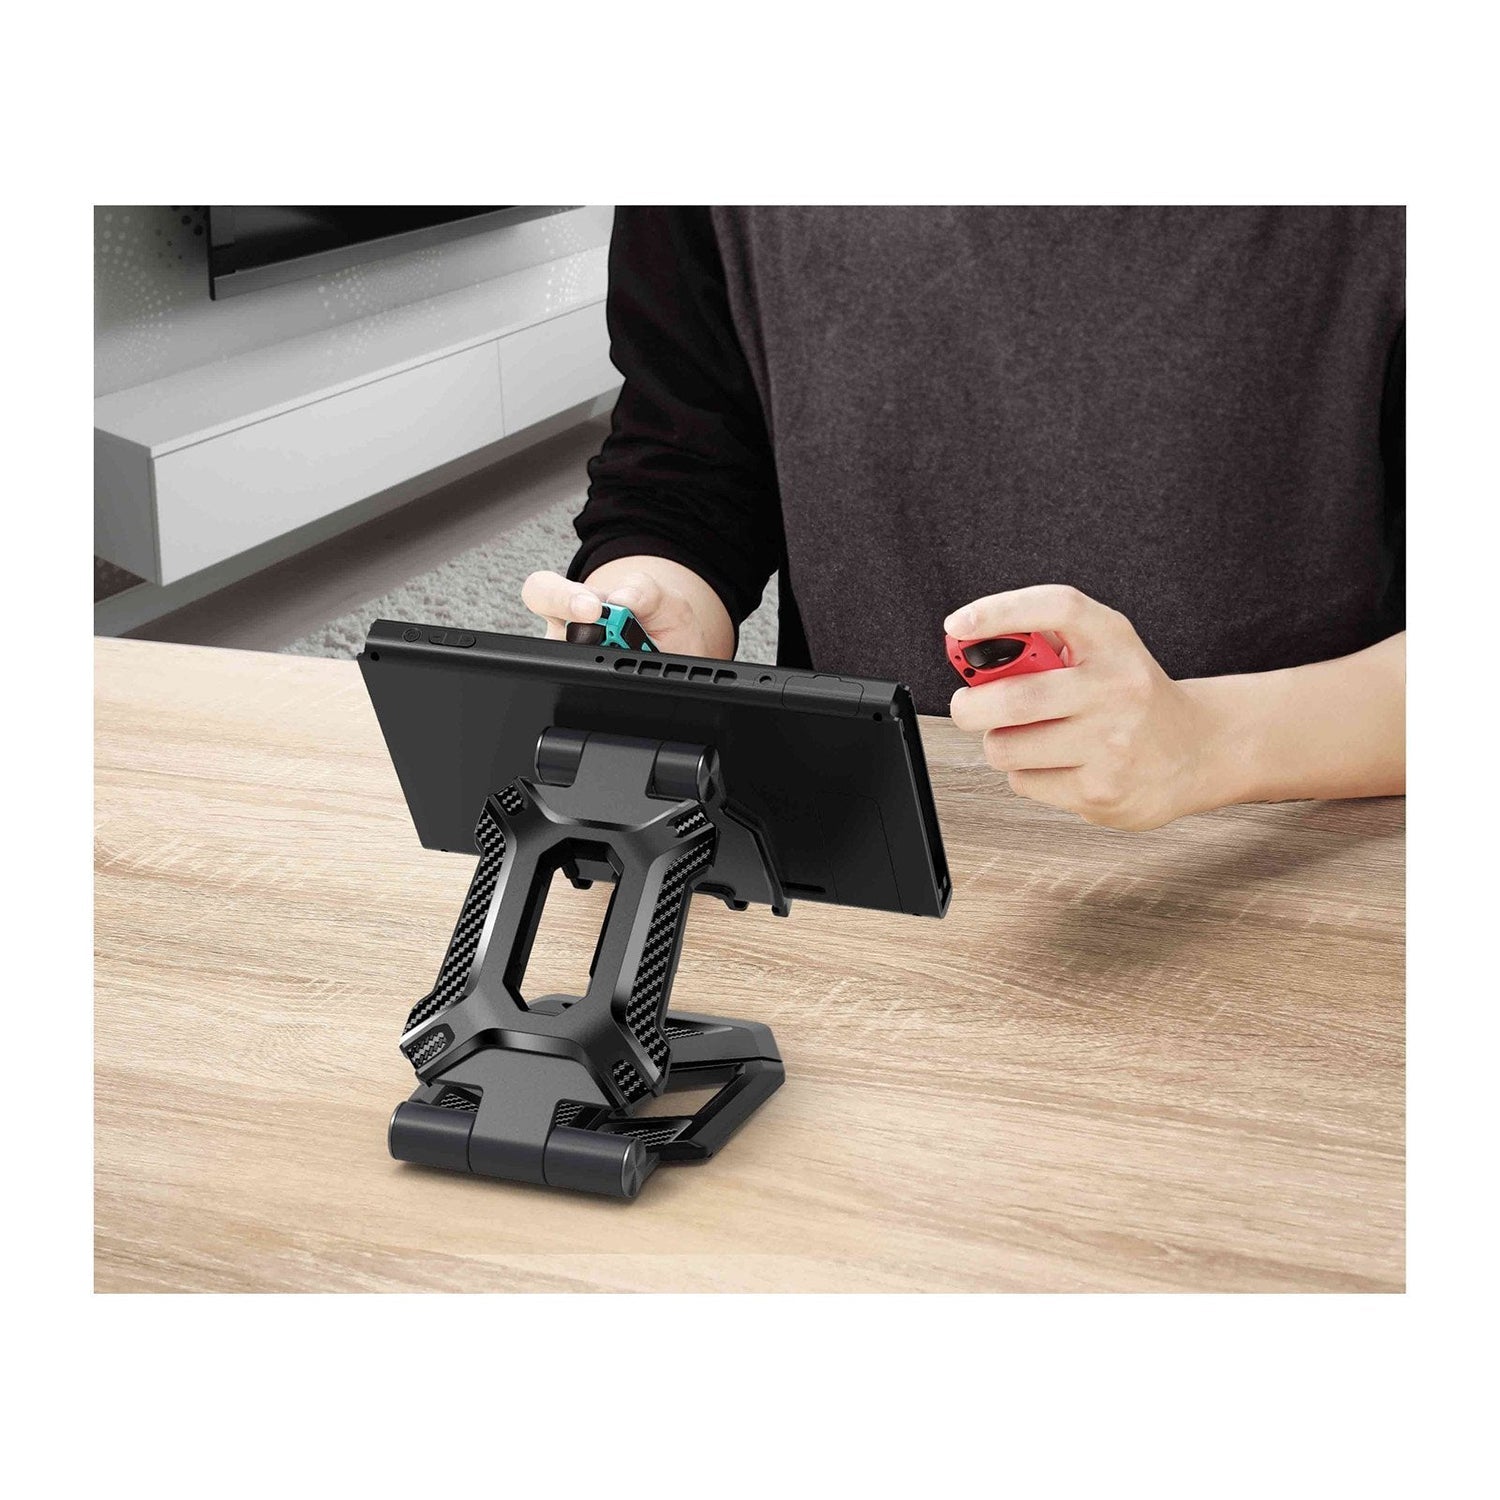 Supcase Heavy Duty Adjustable Desk Stand Holder for Phone Tablet Nintendo Switch Aluminium Foldable Mount Dock Default Supcase 